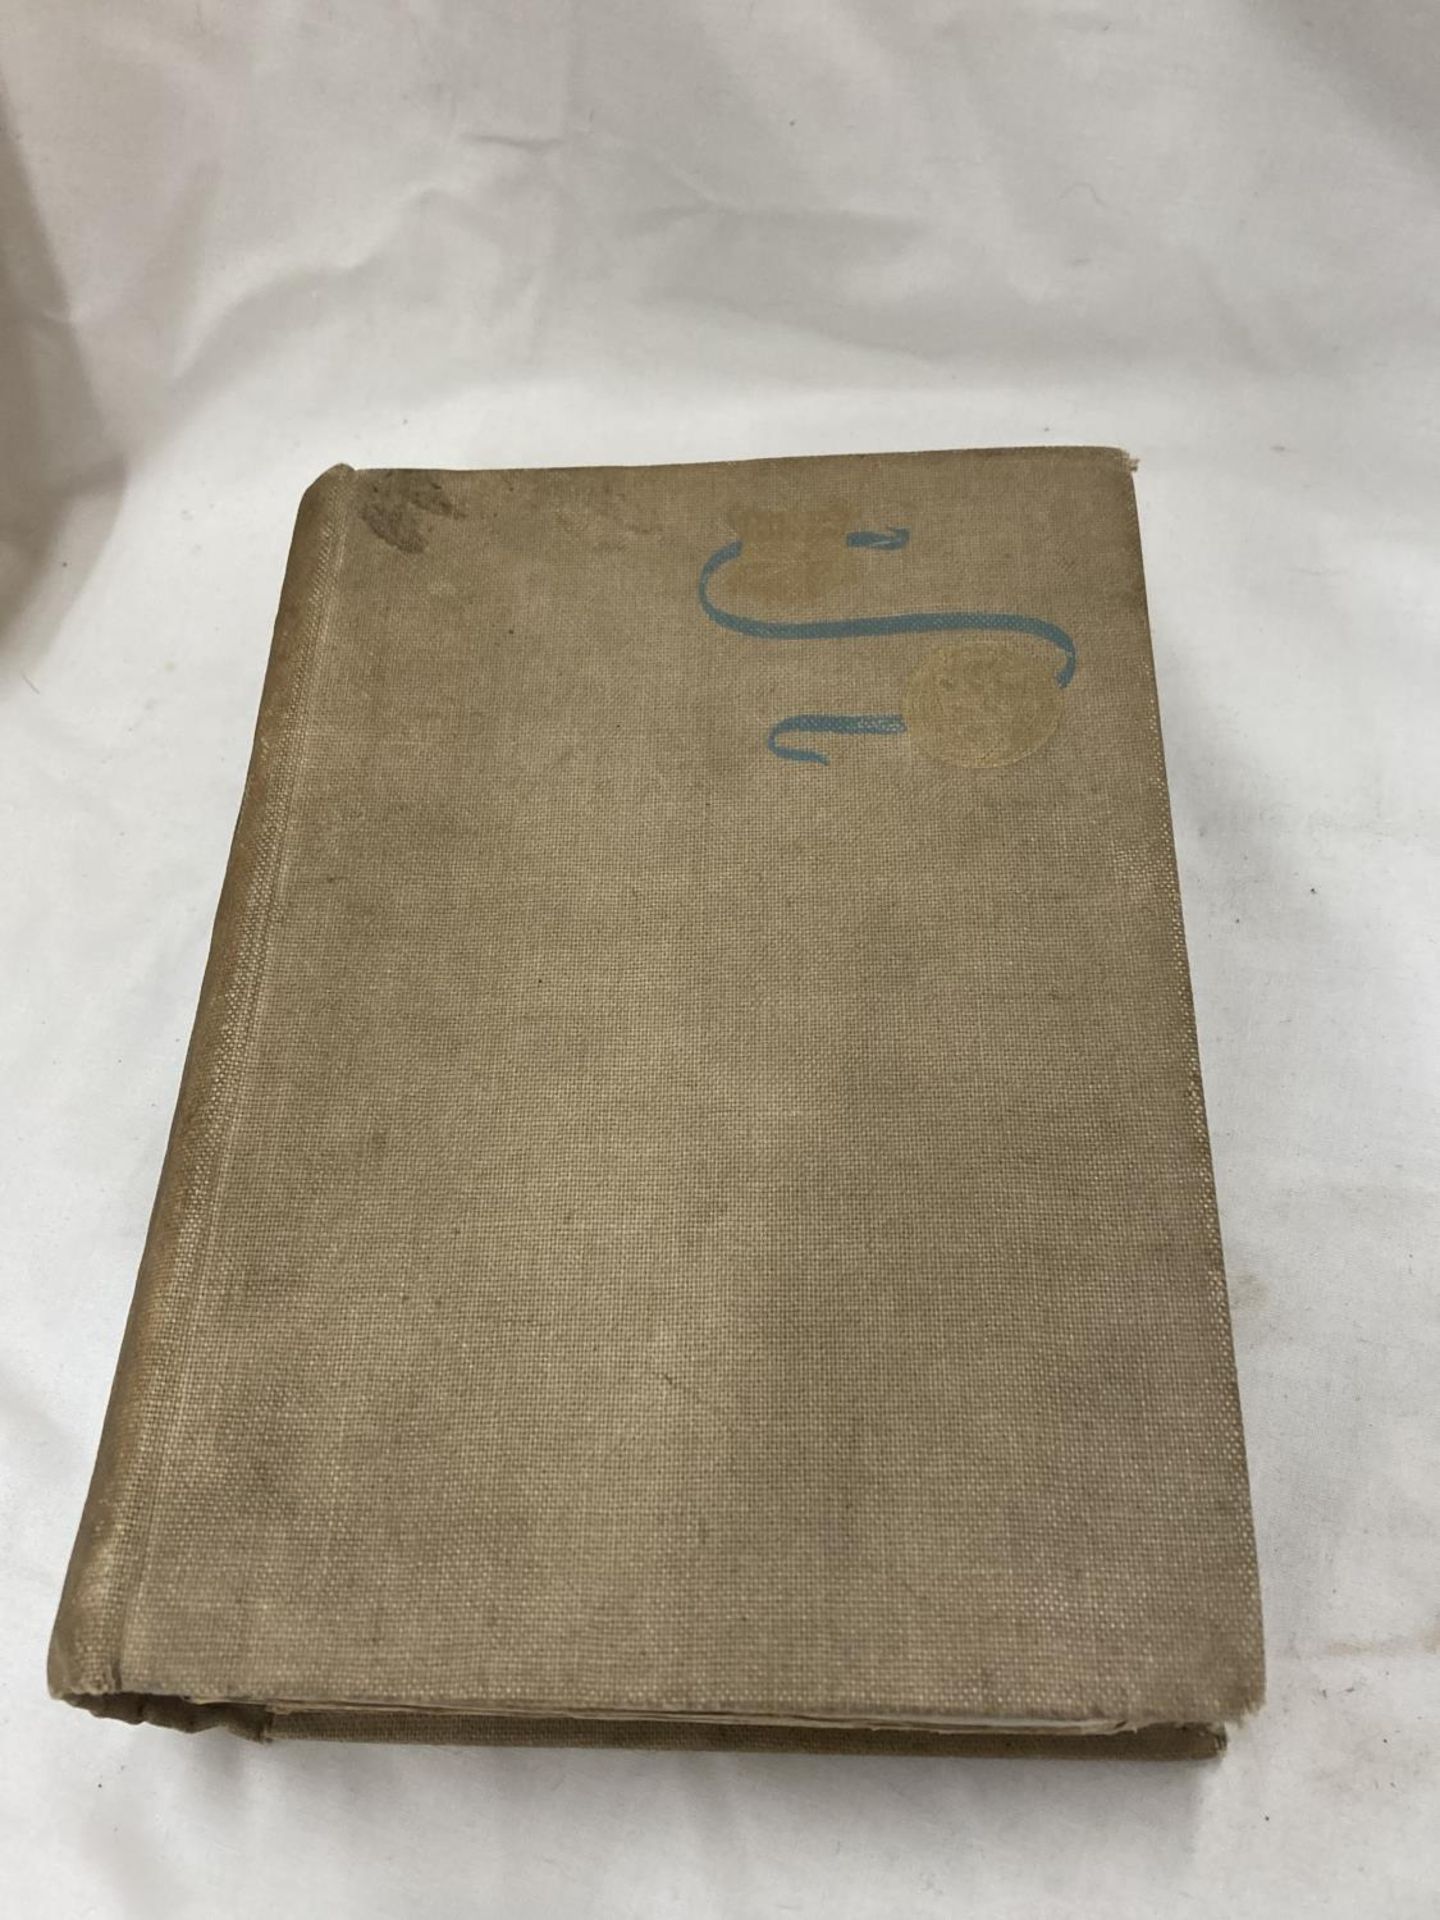 A LATE 19TH CENTURY HARDBACK BOOK - 'THE JUBILEE BOOK OF CRICKET' BY K S RANJITSINHJI